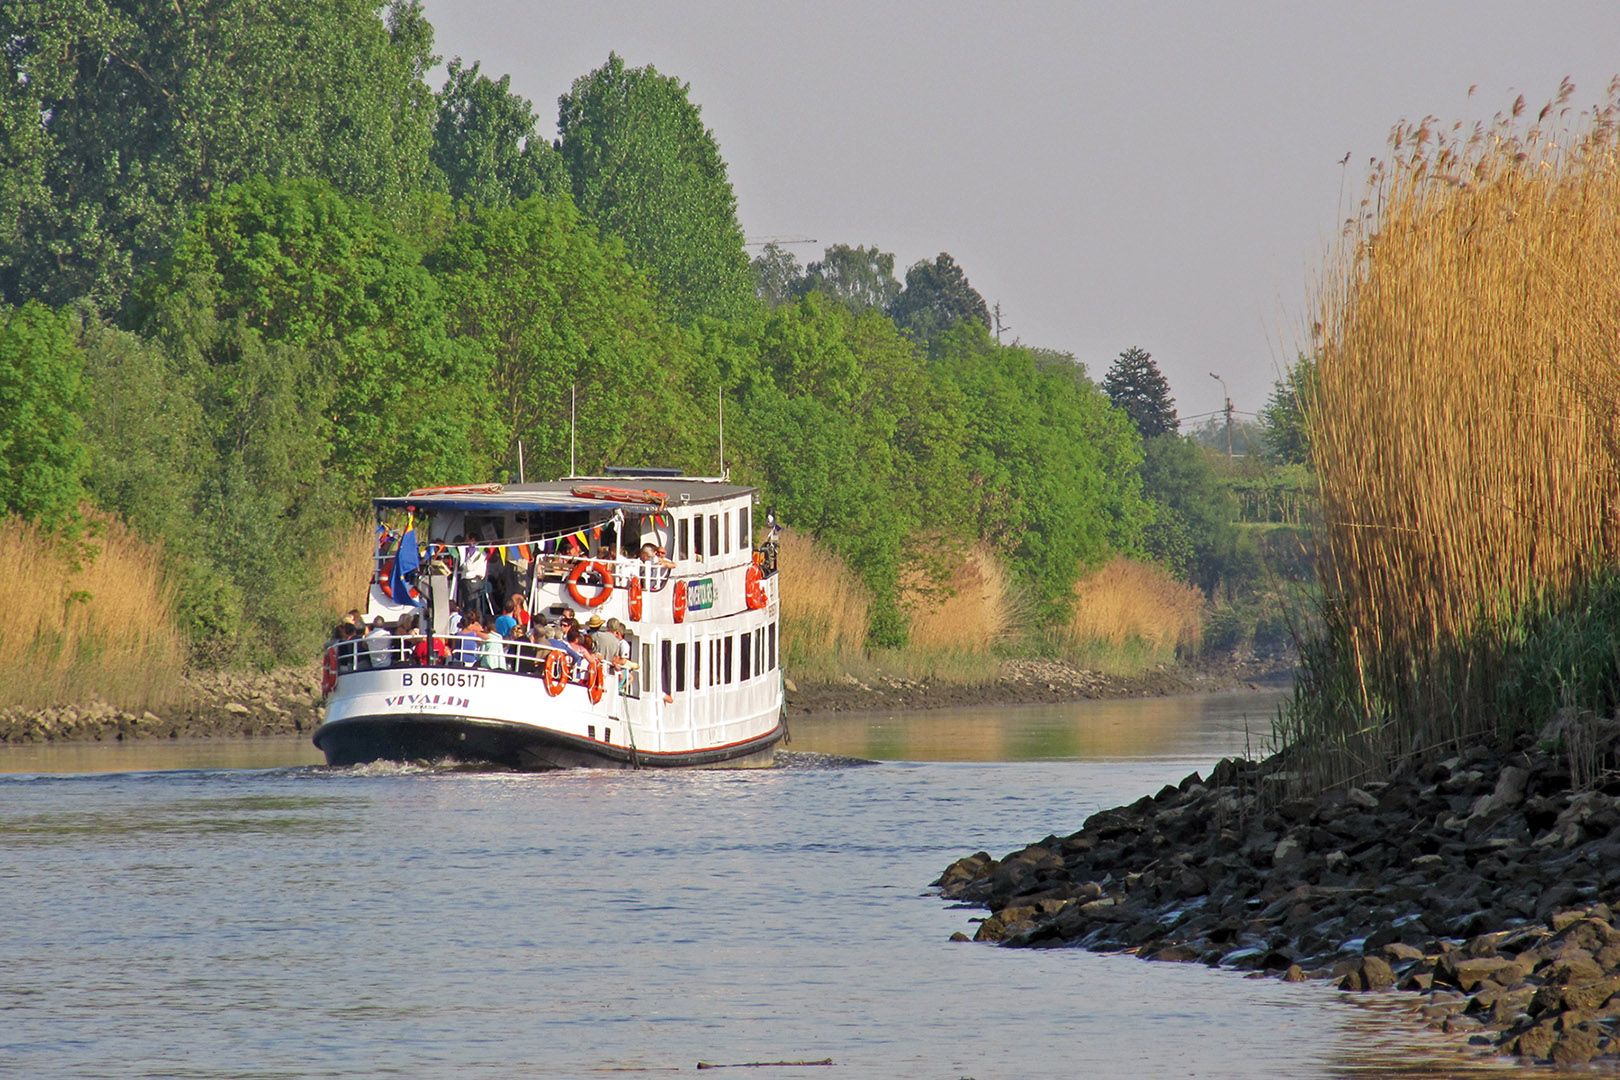 fotoreeks One way boat trip from Schellebelle to Dendermonde